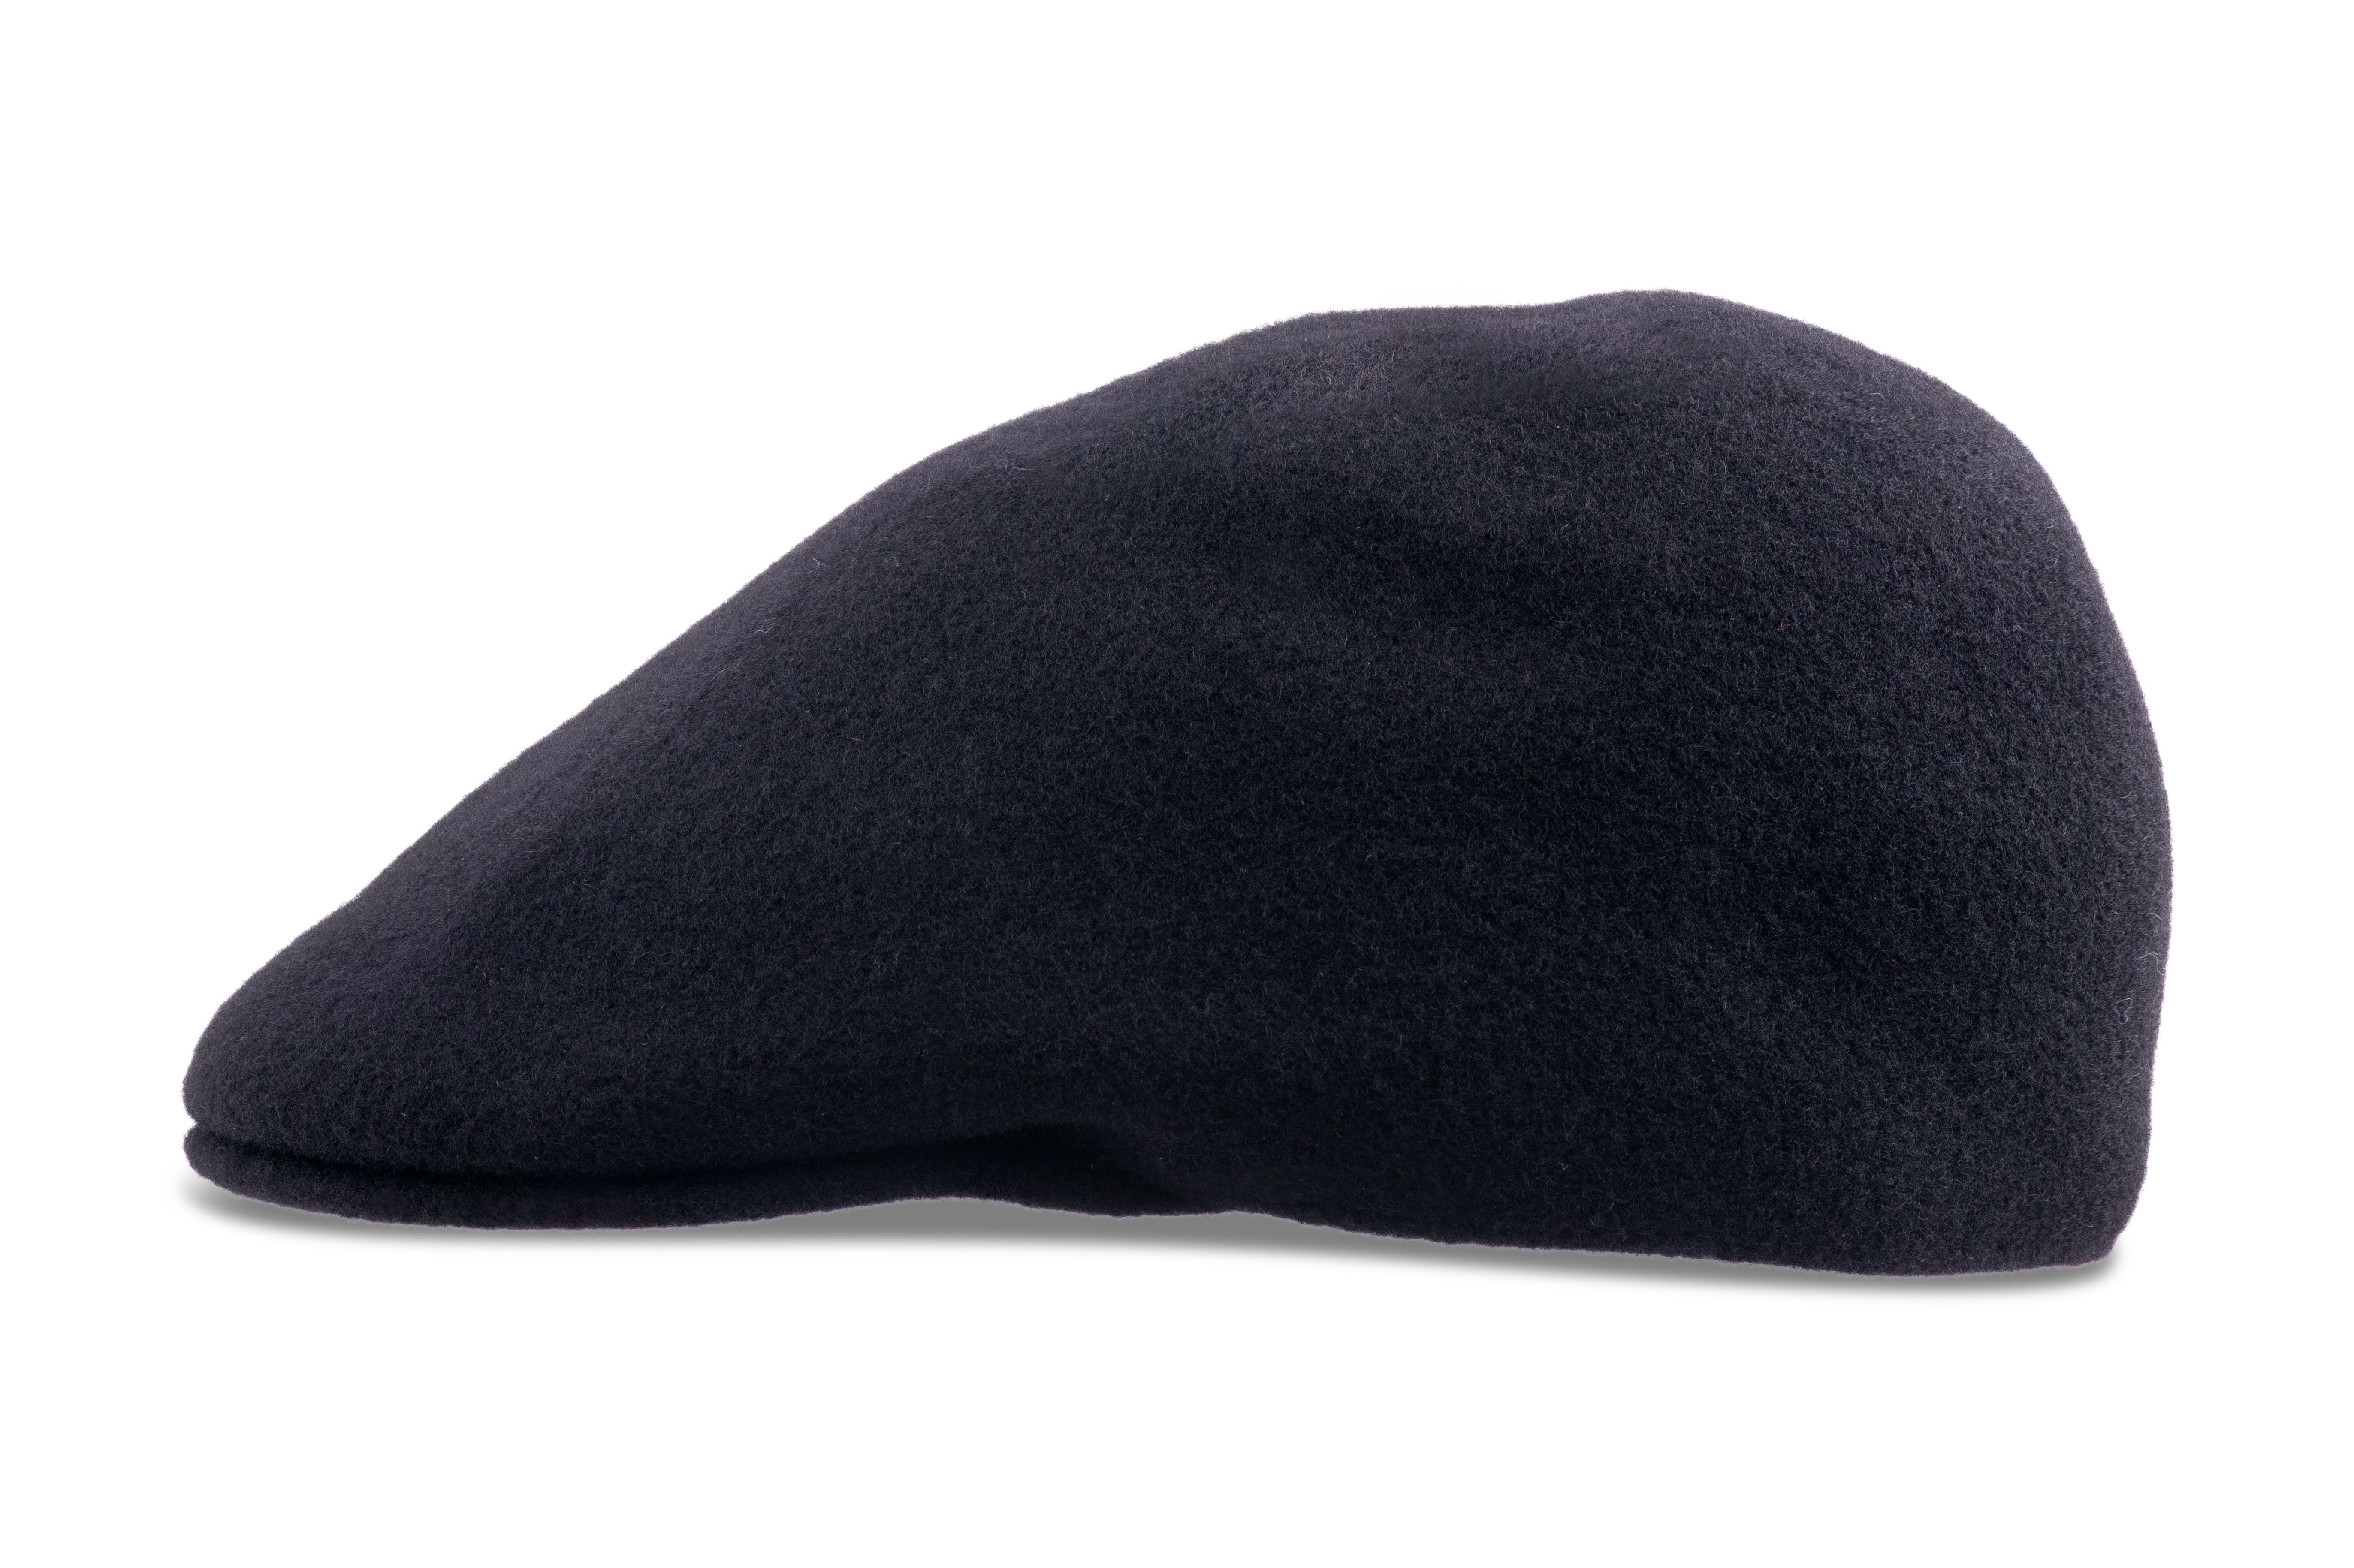 Kangol Seamless Wool 507 Felt Hat for Men and Women - Black - S